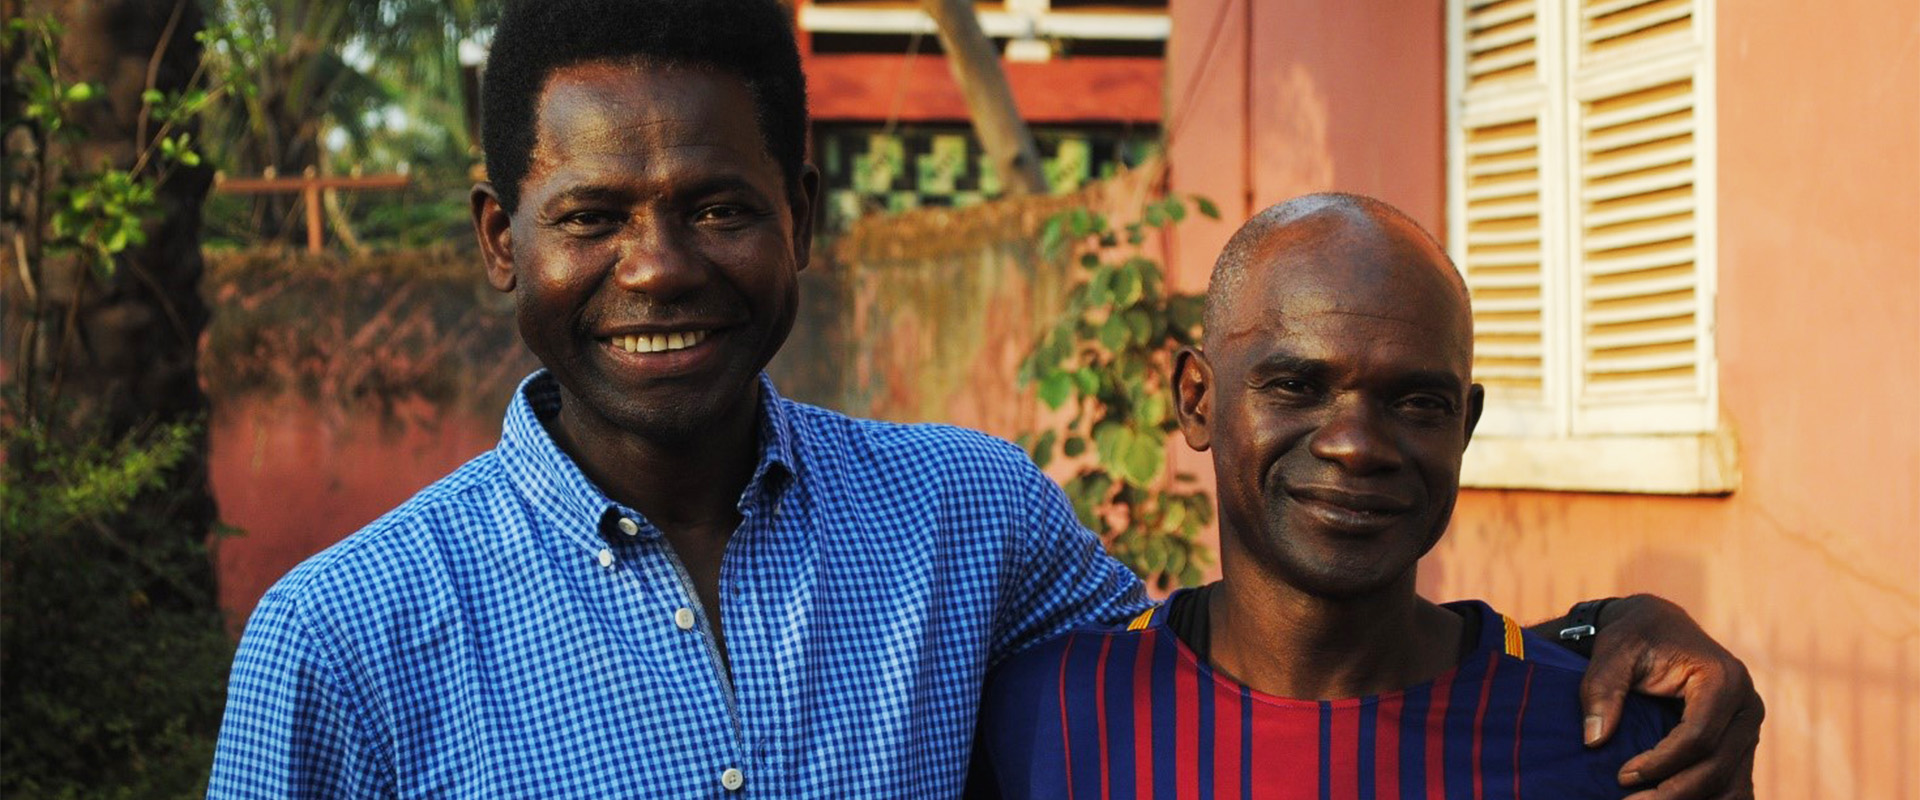 braima autista fratello incontro Guinea Bissau Mani Tese 2018